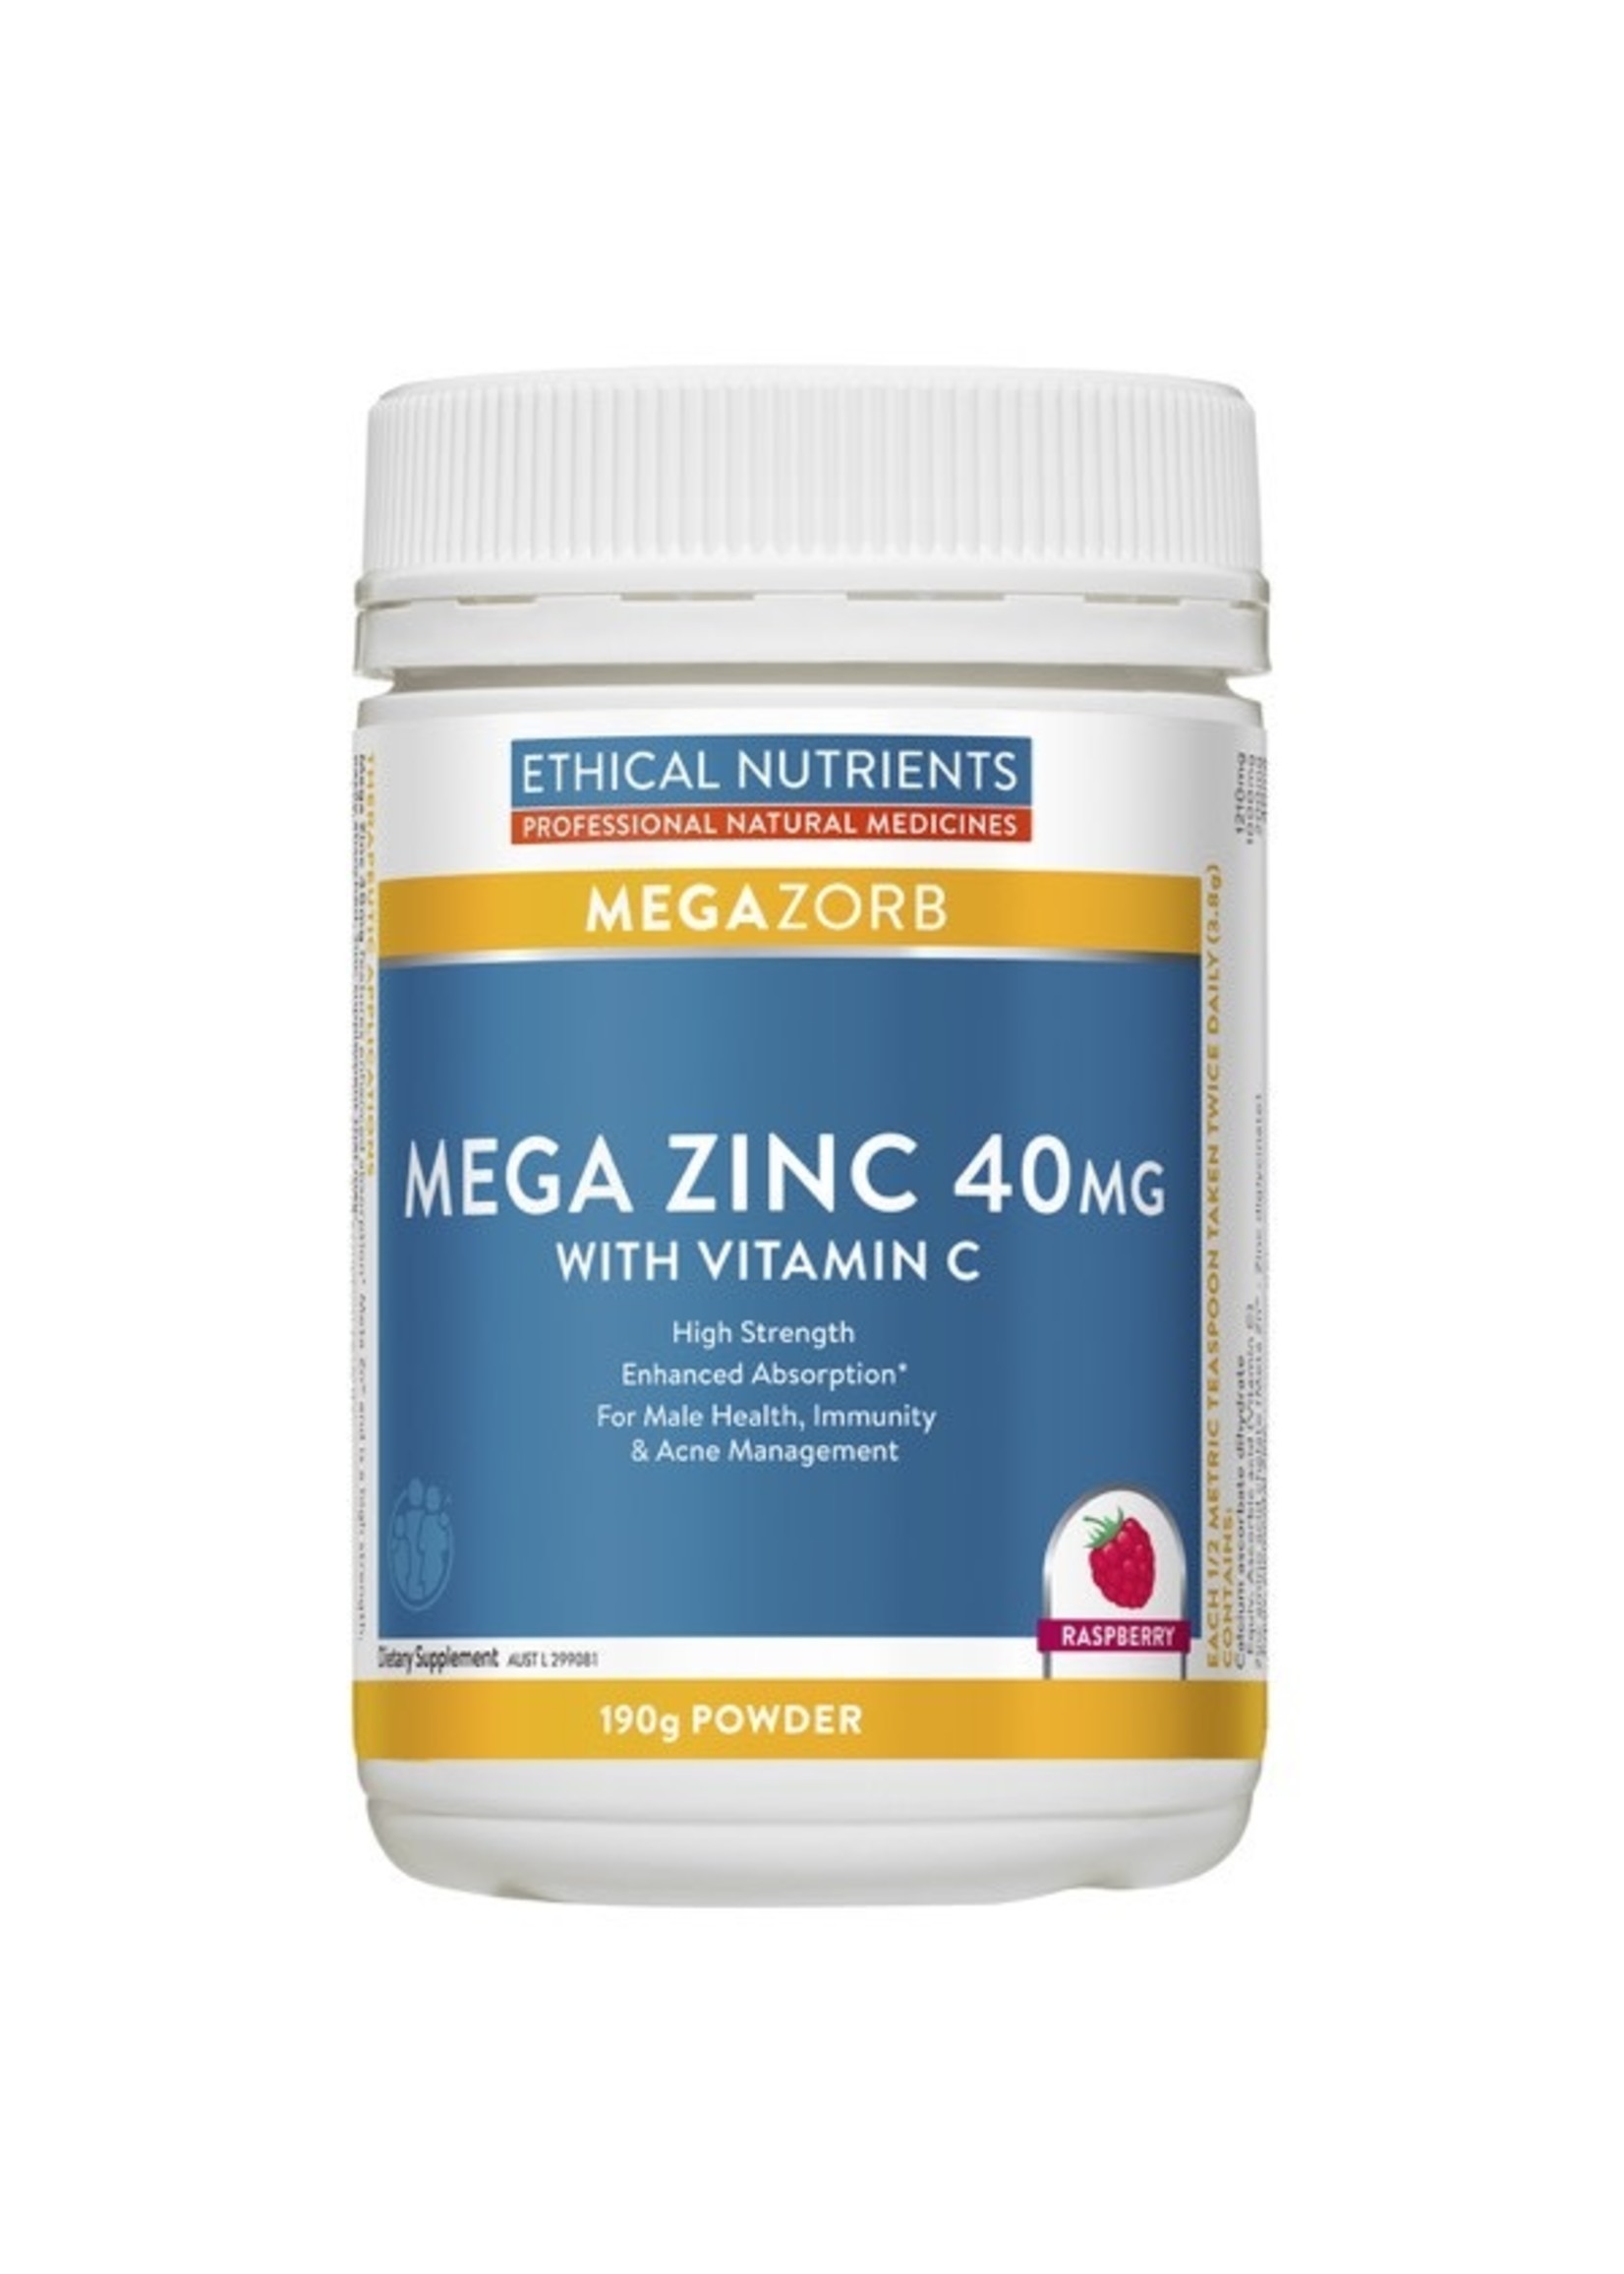 ETHICAL NUTRIENTS Ethical Nutrients Mega Zinc Powder Raspberry 190g